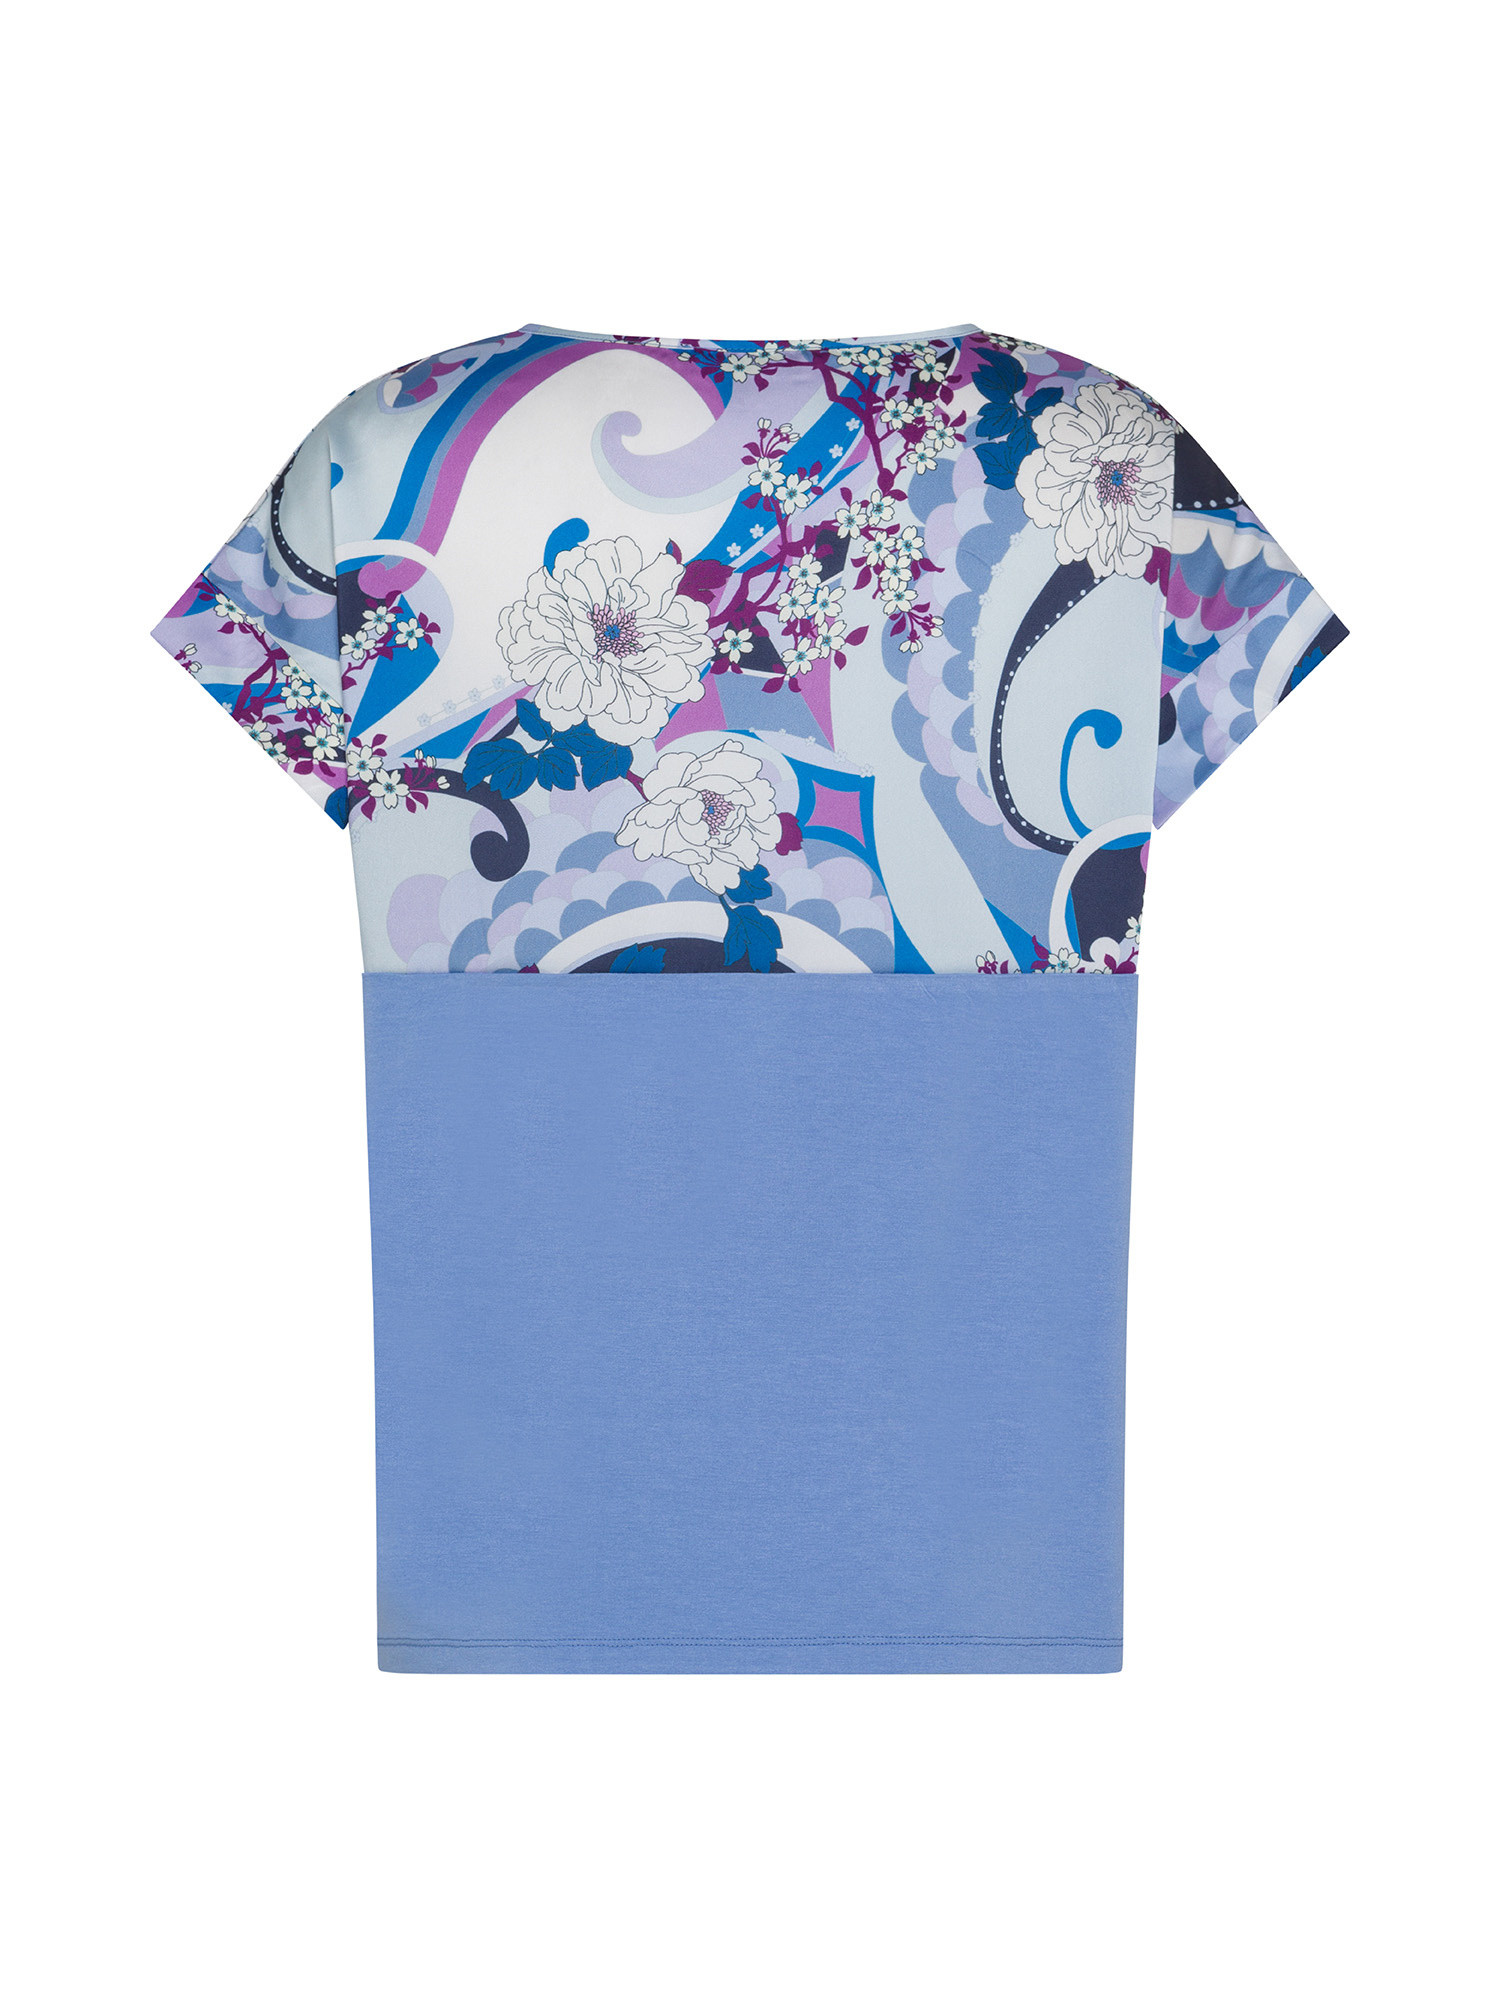 Koan - T-shirt con micro fantasia, Blu avio, large image number 1